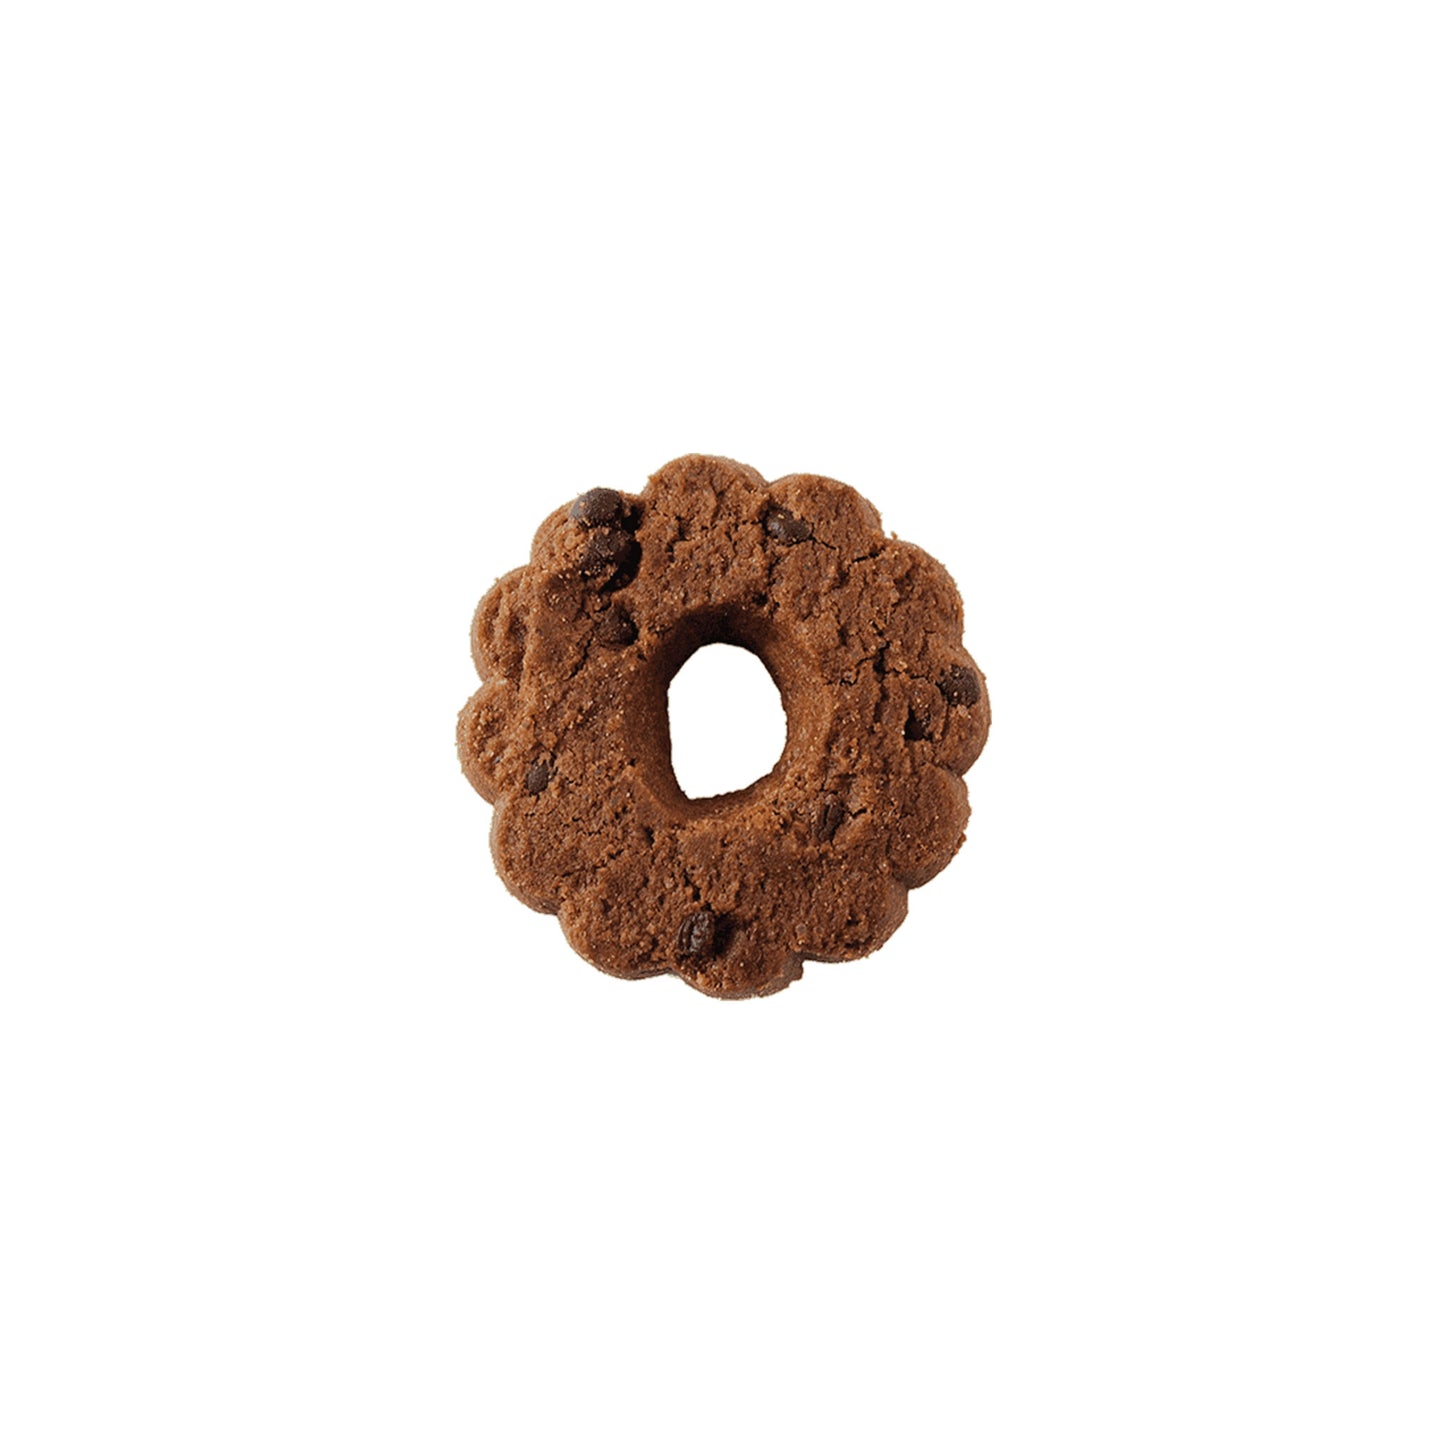 Grondona Biscuits Biscottini Di Pasticceria: 150g - Frankies Pantry and Cellar